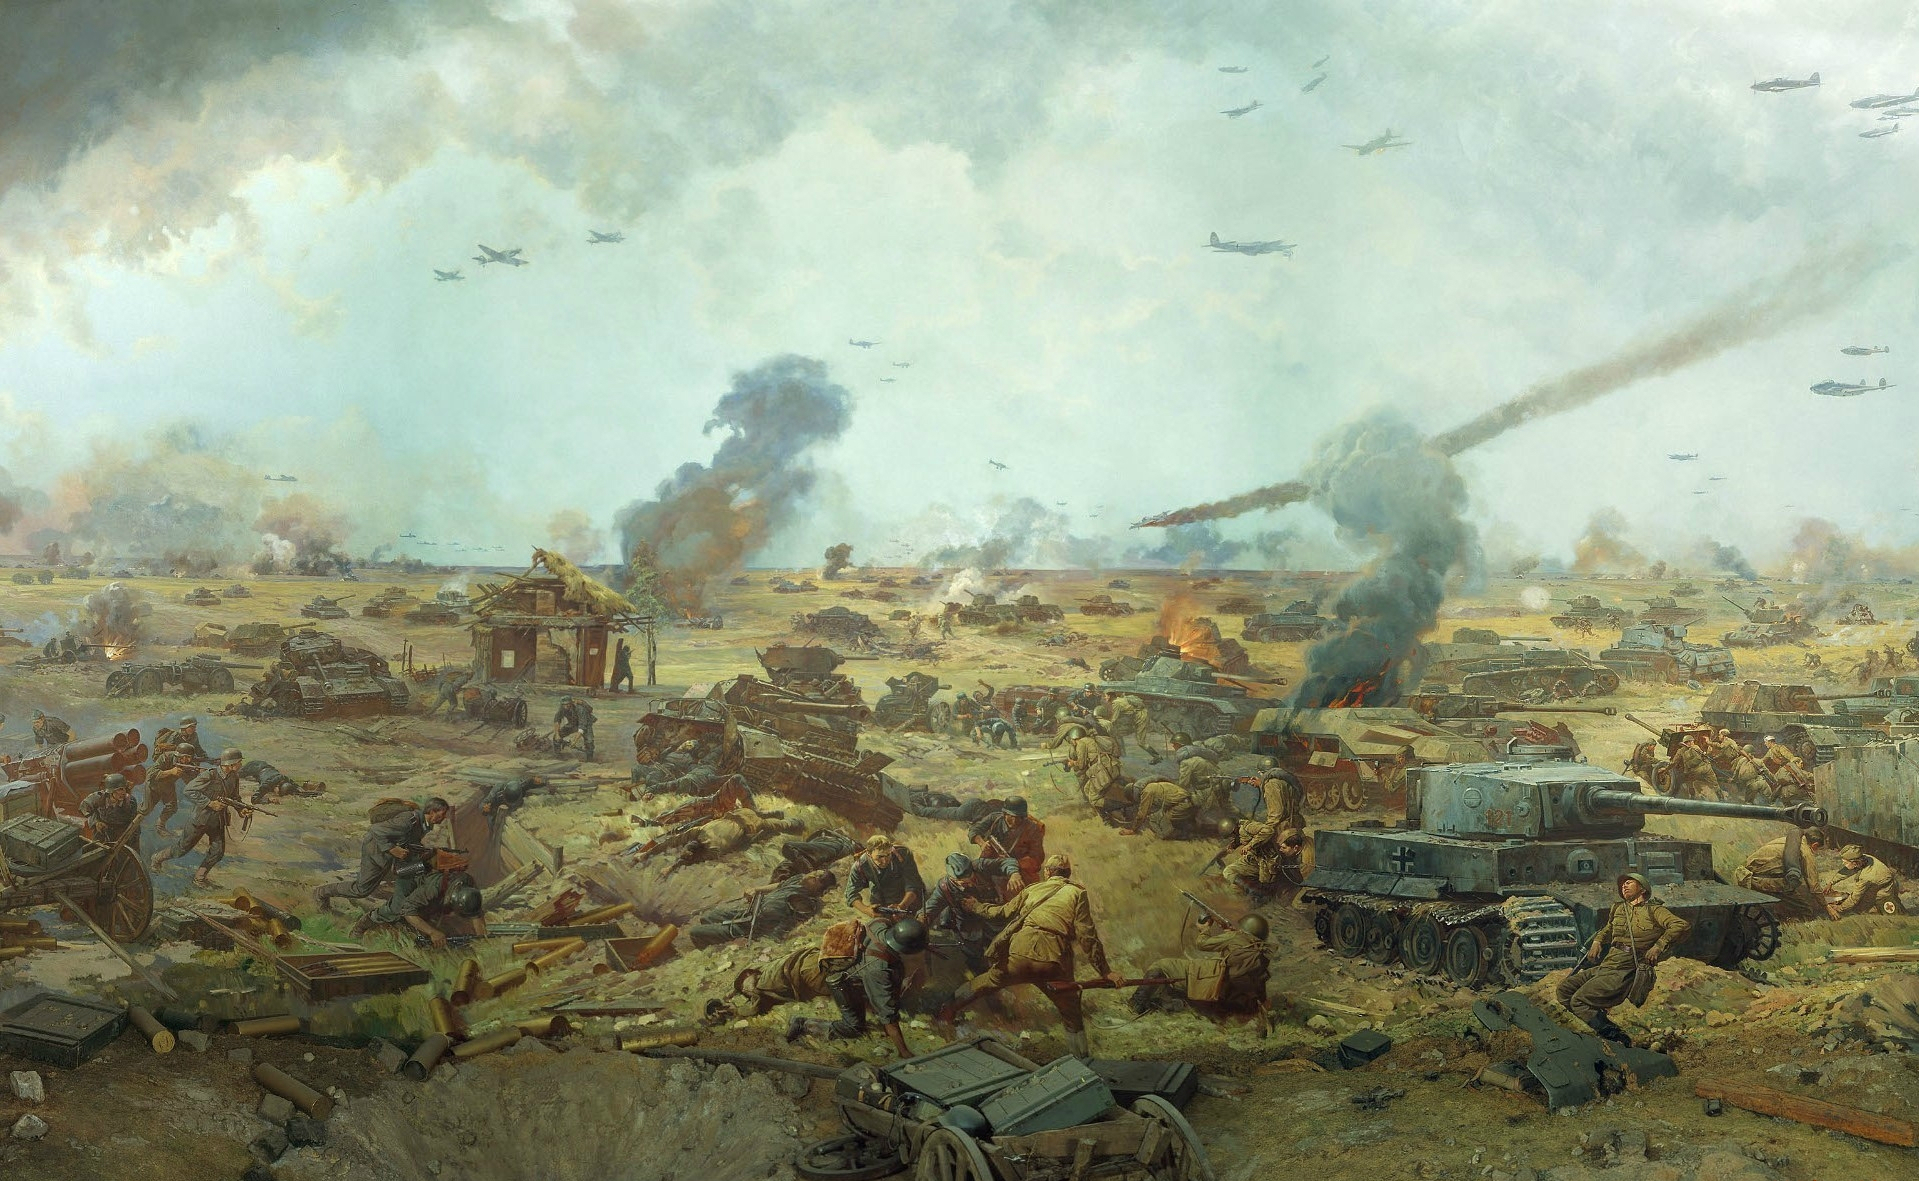 Artistic portrayal of military scene during World War II